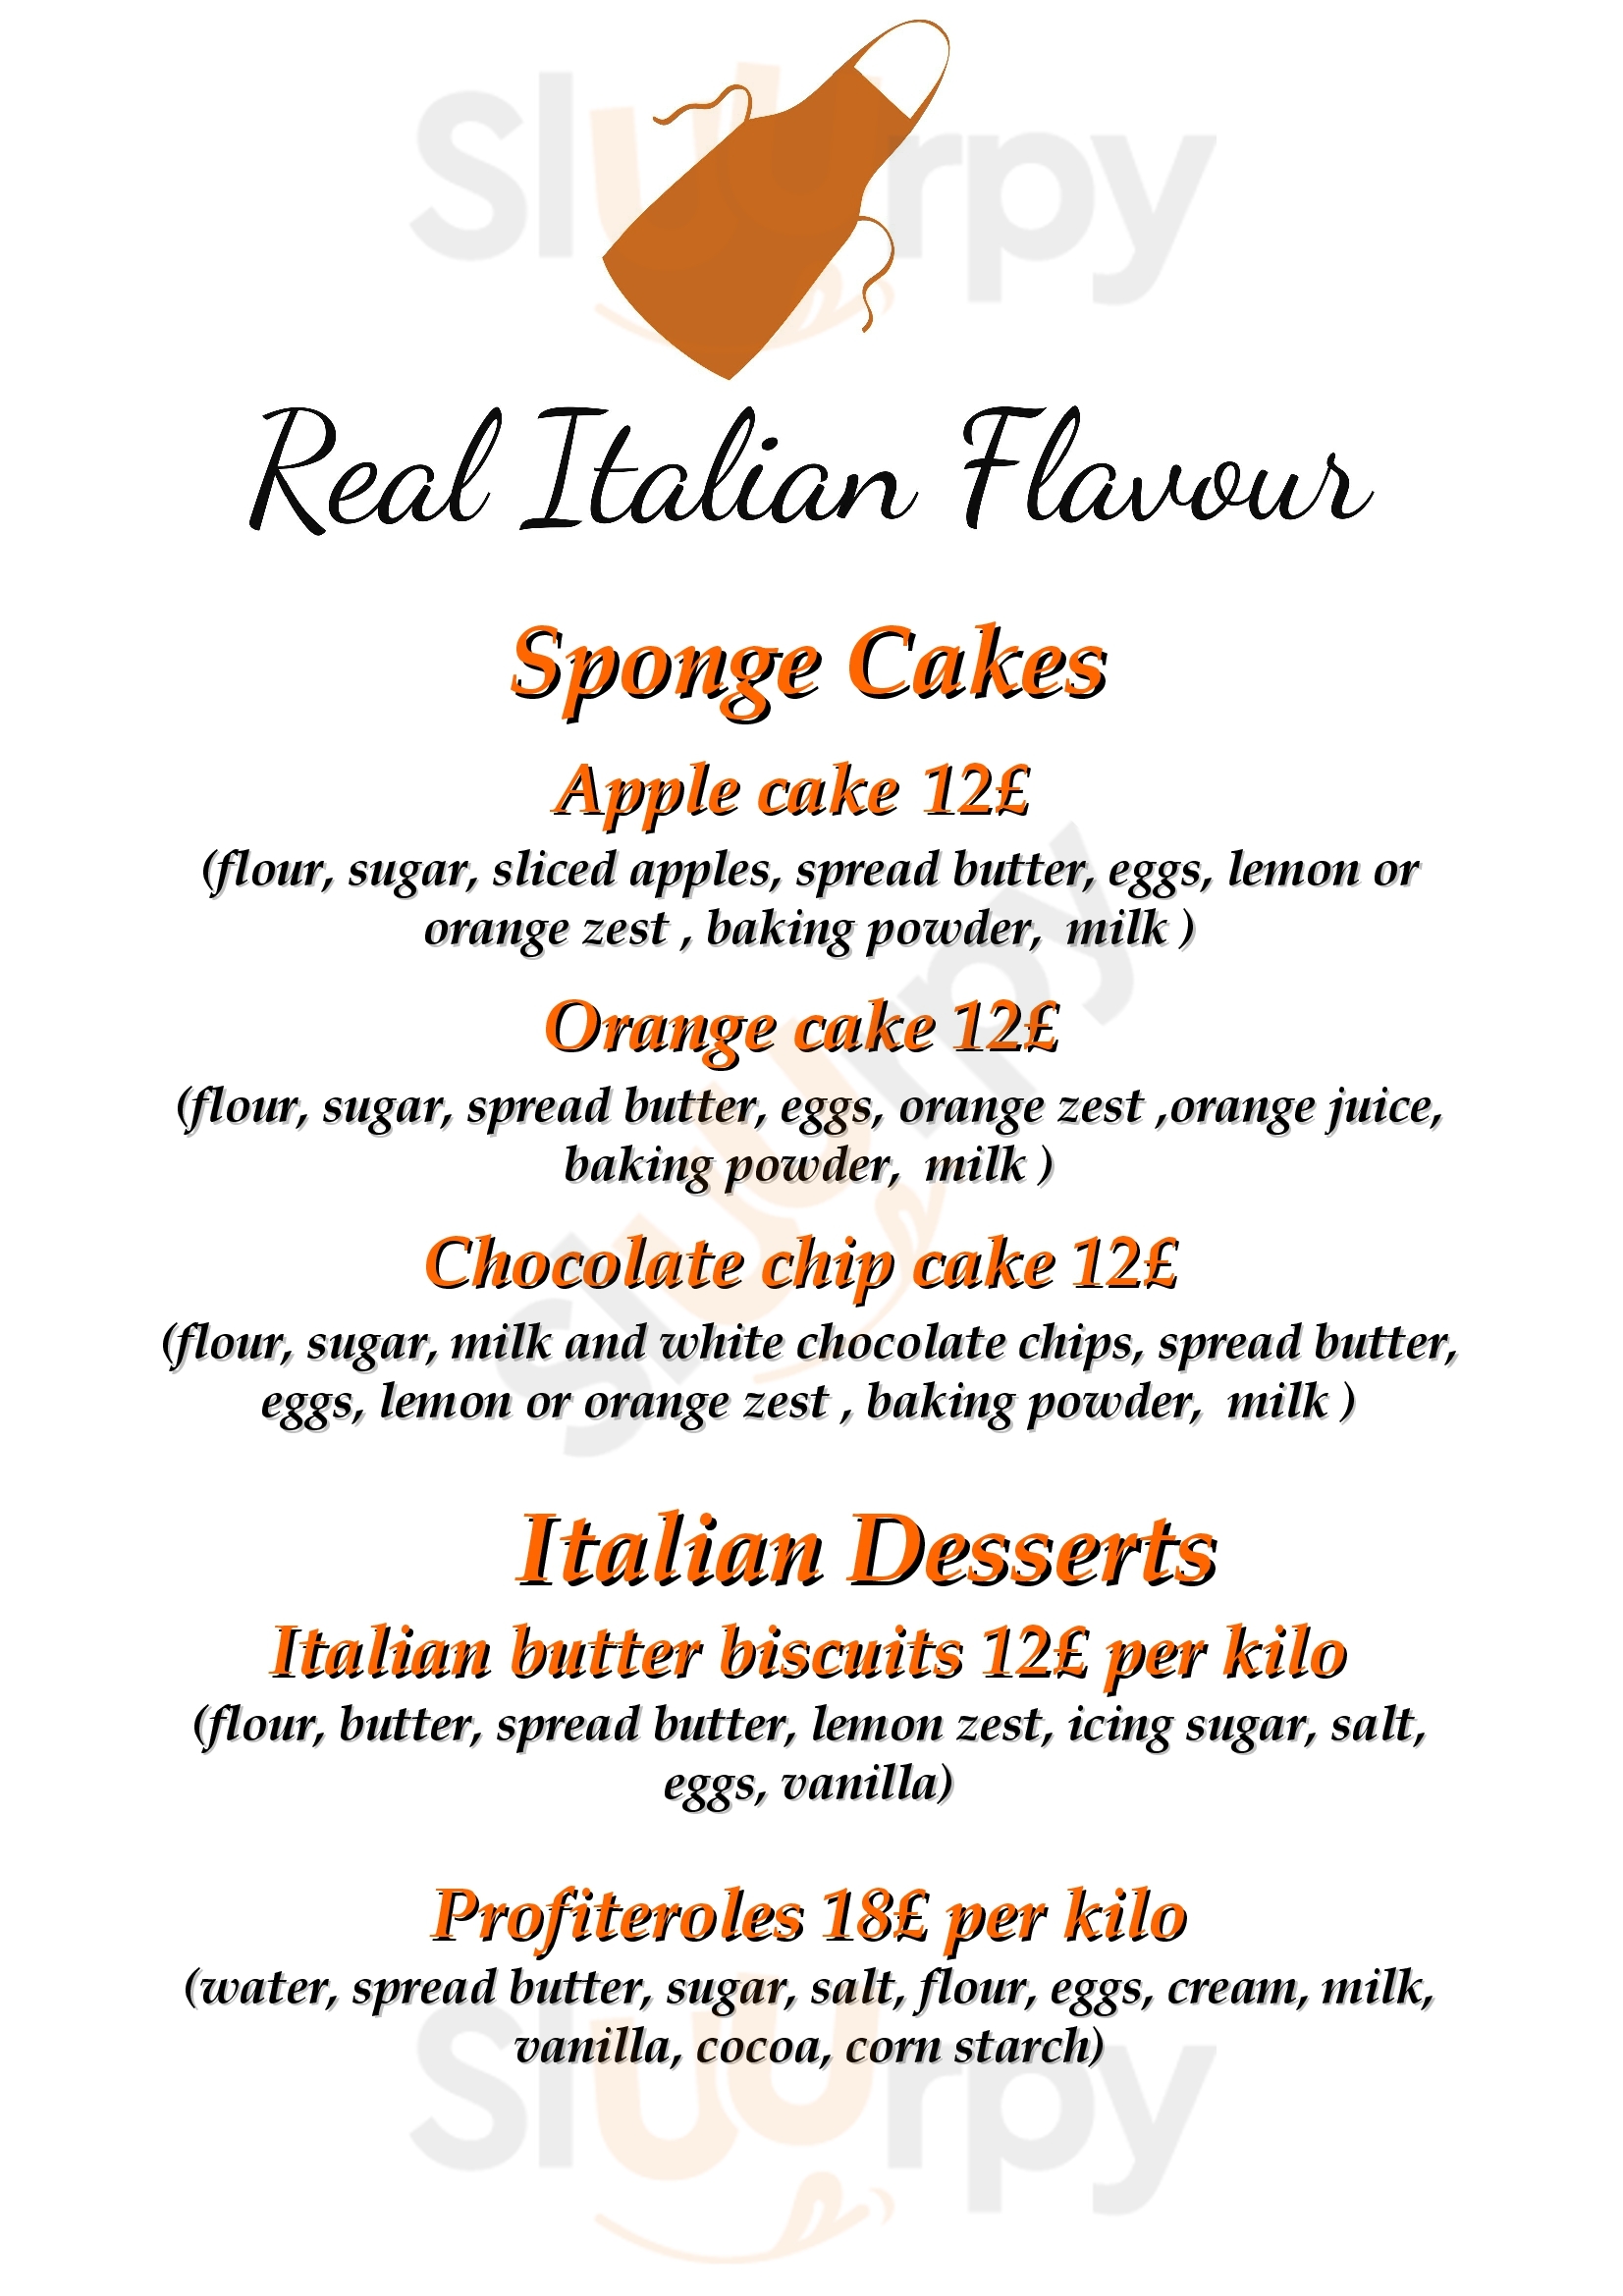 Real Italian Flavour Glasgow Menu - 1